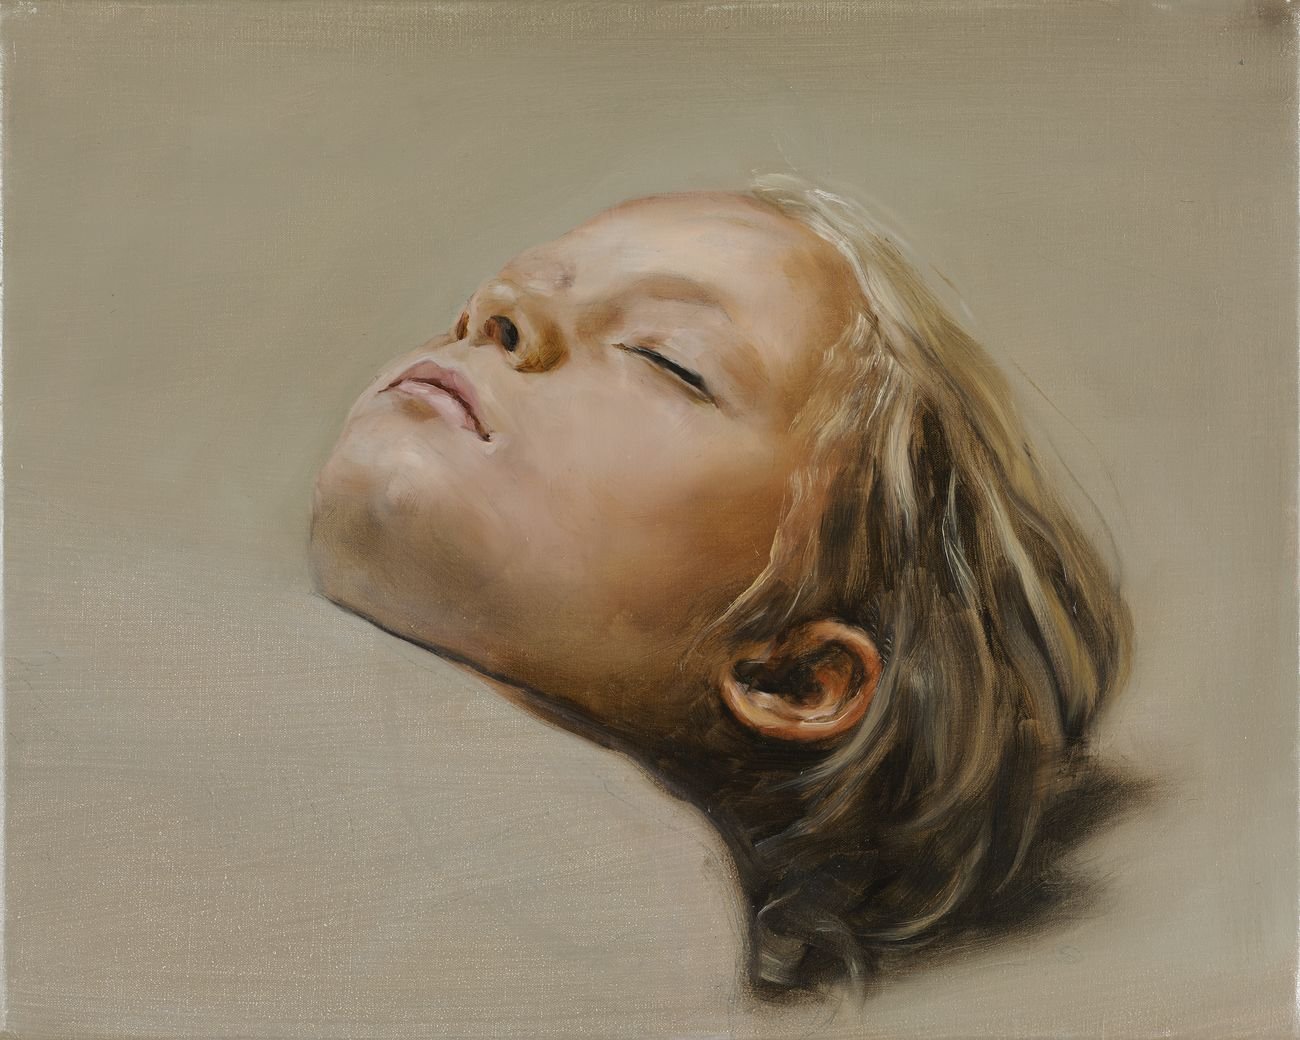 Michaël Borremans, Sleeper, 2007-08. Courtesy Zeno X Gallery, Anversa. Photo Peter Cox